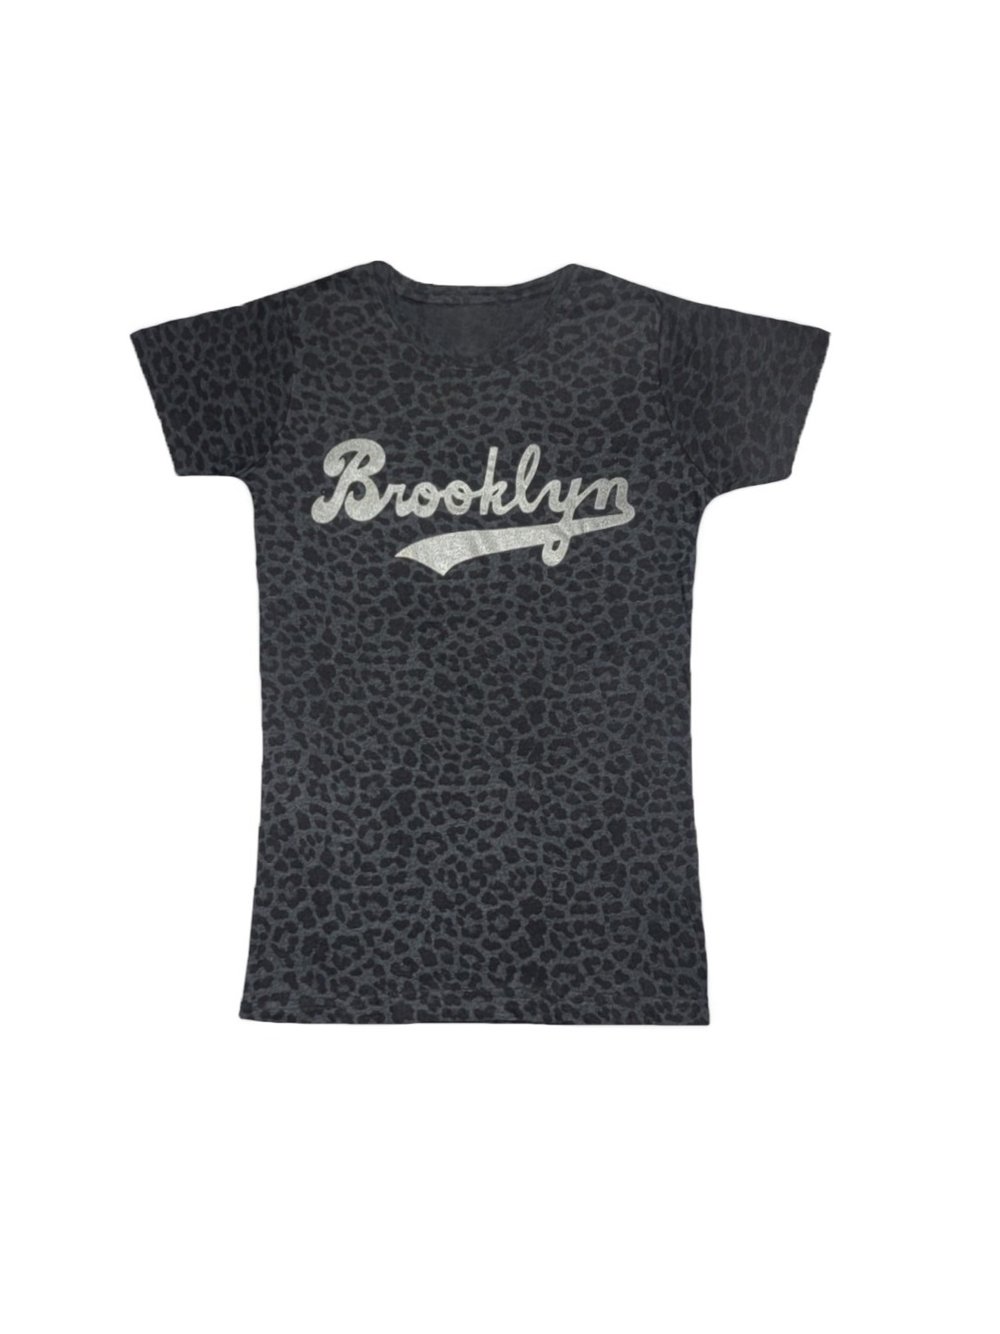 Ladies Brooklyn Dodgers Animal Print T-shirt. — brooklynite designs.